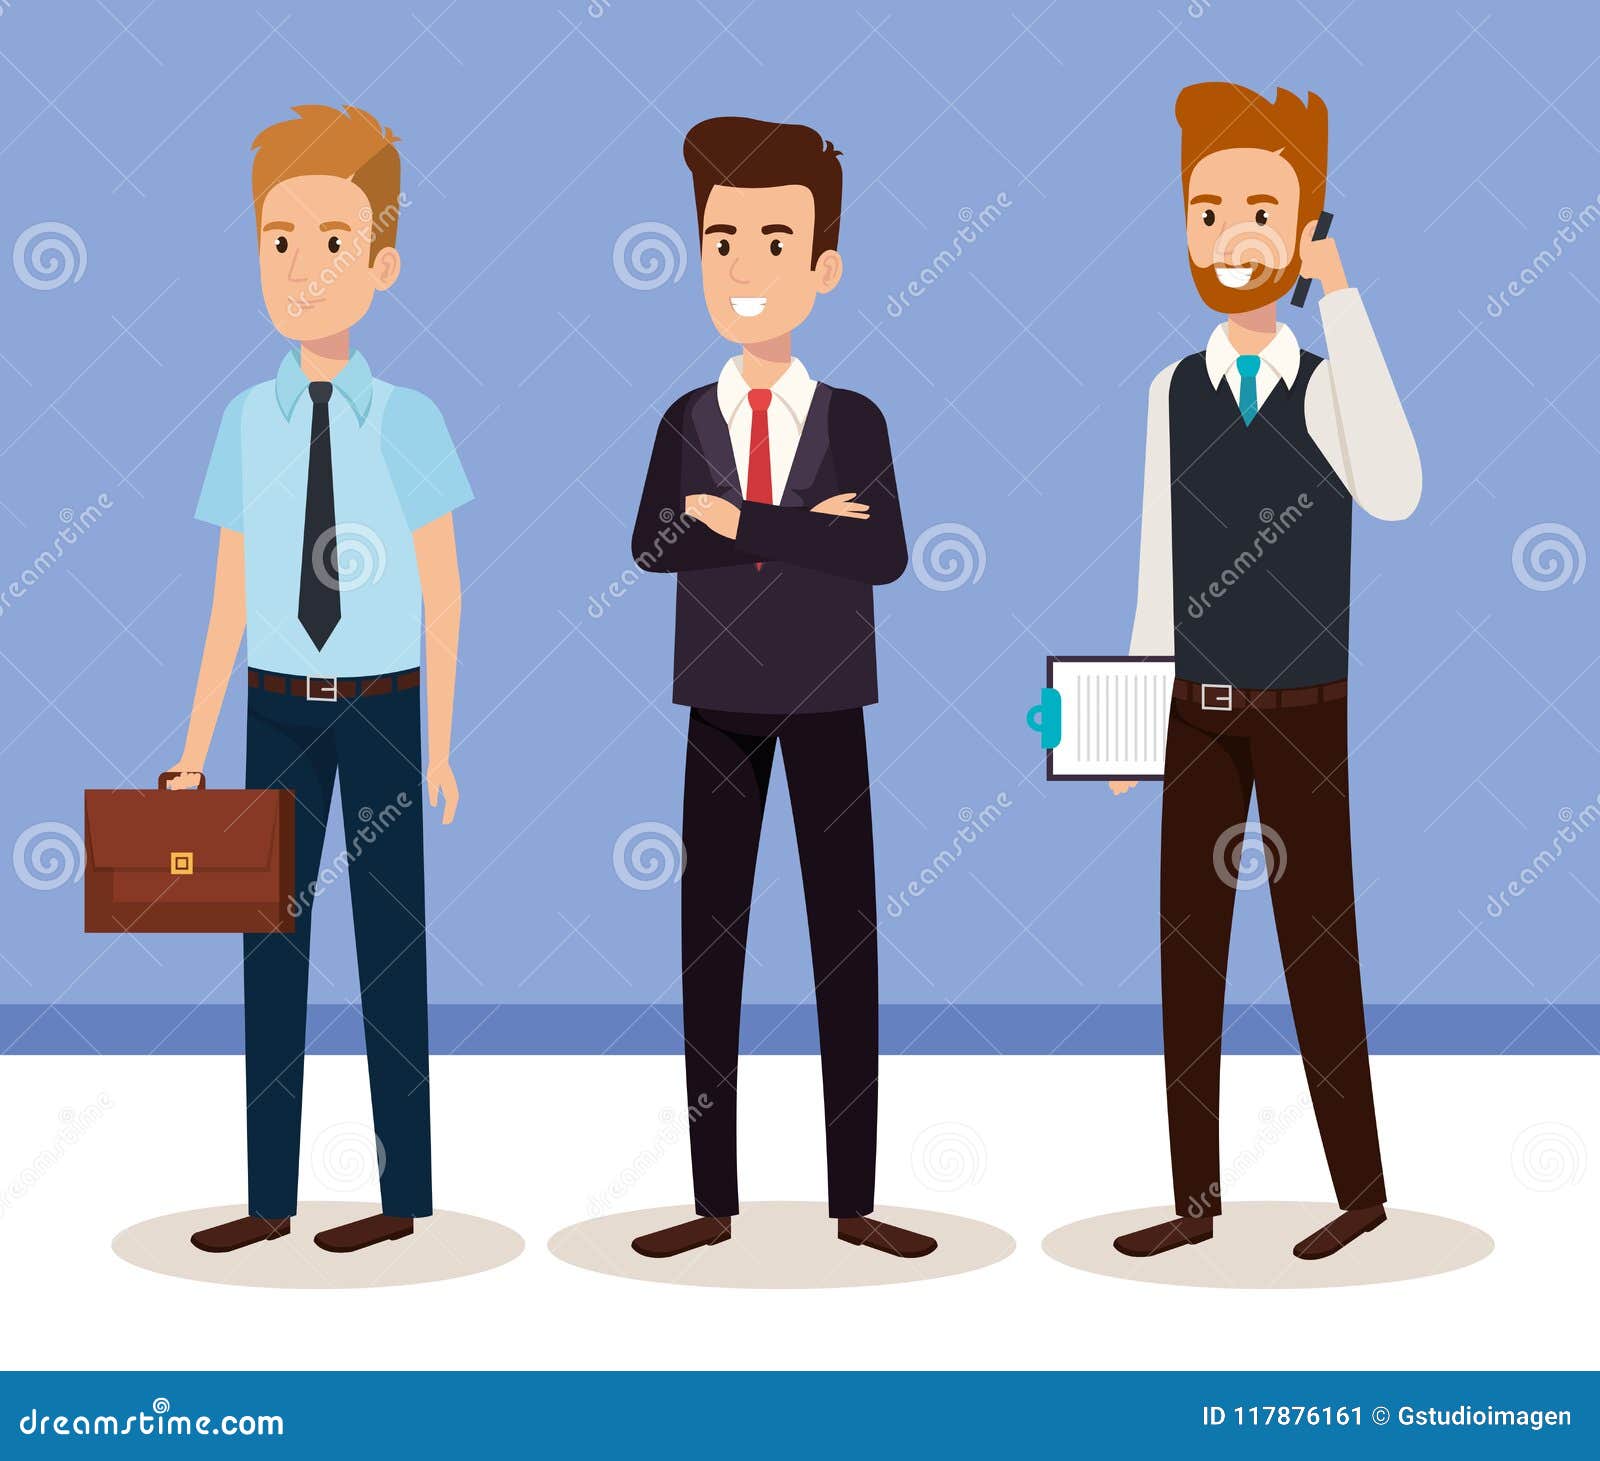 Business Men Isometric Avatars Stock Vector - Illustration of human ...